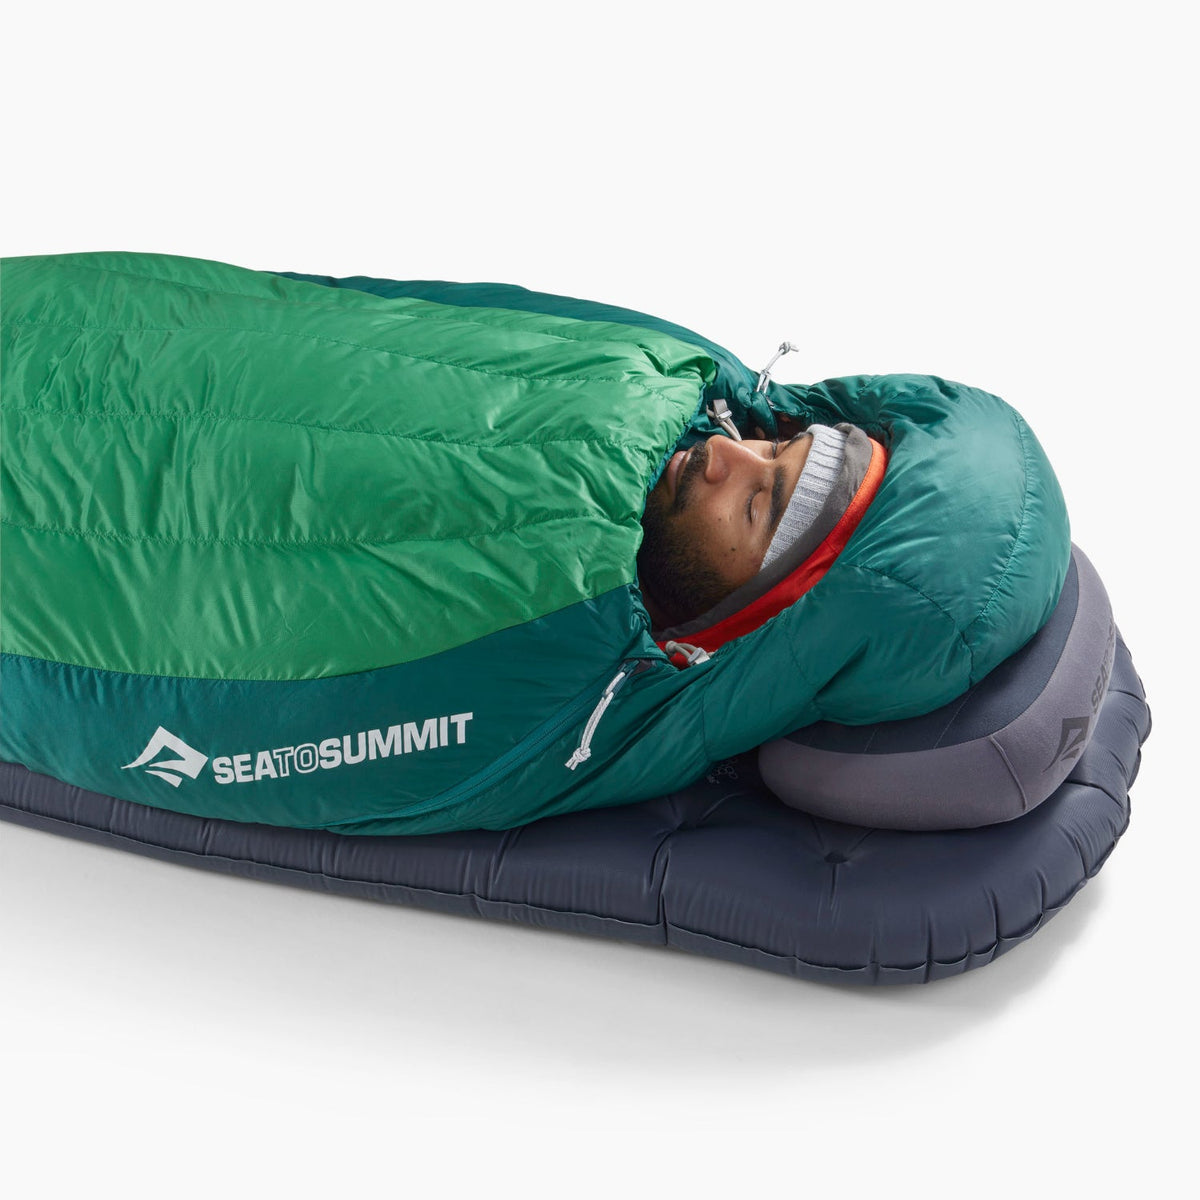 Sea to Summit Ascent Down Sleeping Bag -1°C